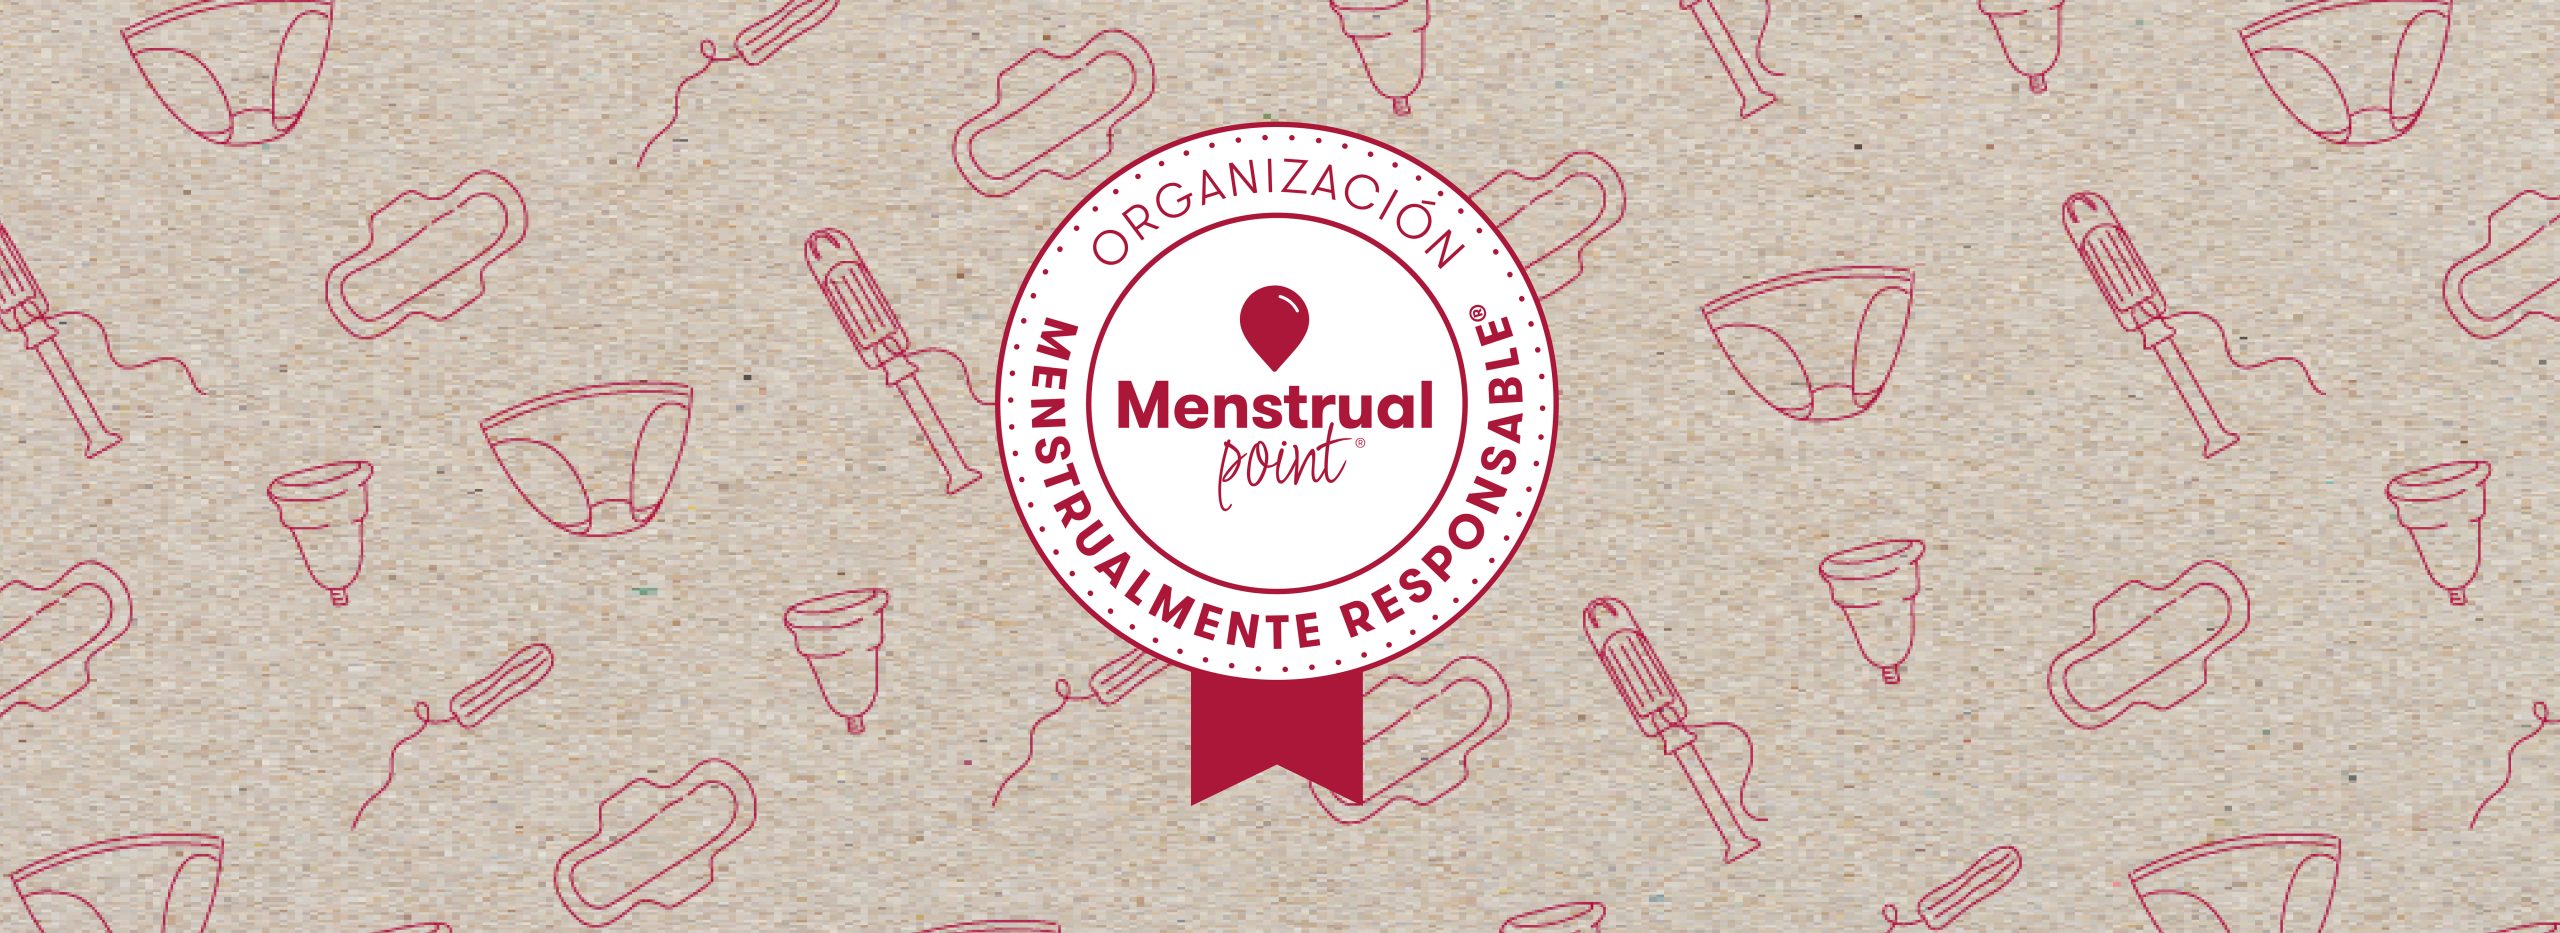 papelmatic-higiene-profesional-guia-para-comprar-productos-higiene-menstrual-point-certificacion